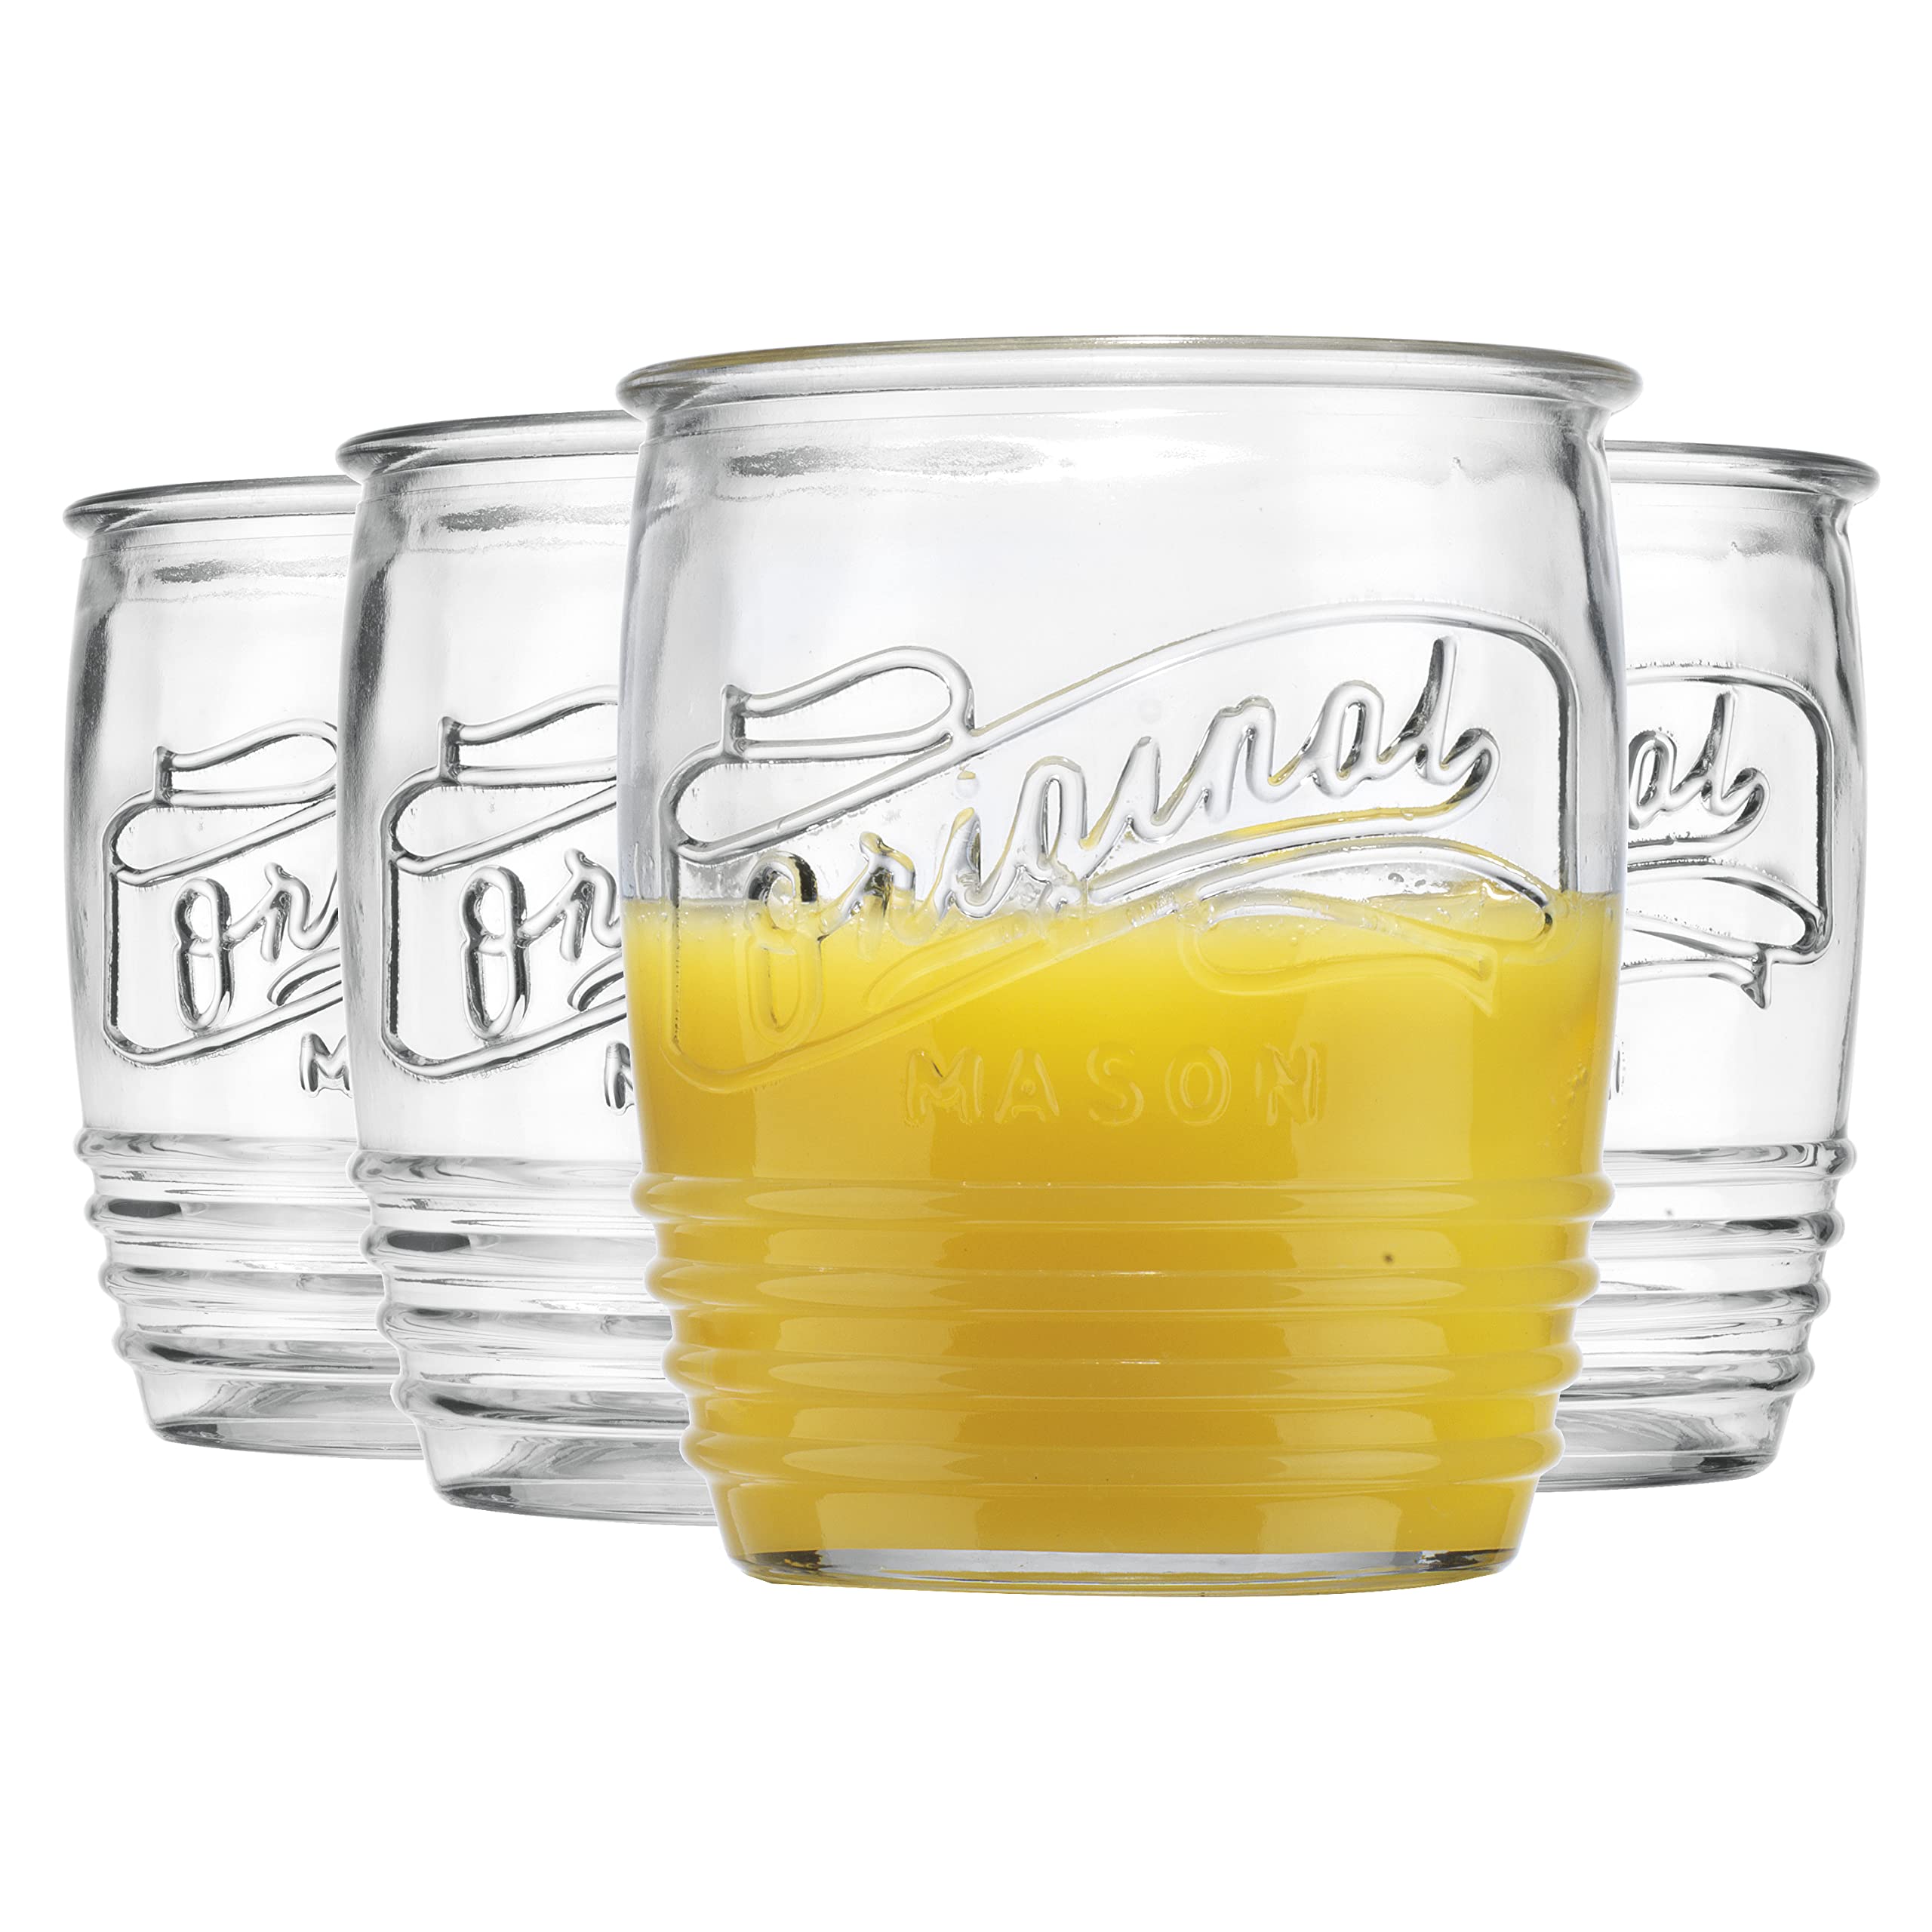 Glaver's Set Of 4 Original Mason Collins Glasses Drinking Glasses For Juice, Cocktails, Beverage Glass Cups, Hand Wash.  - Good